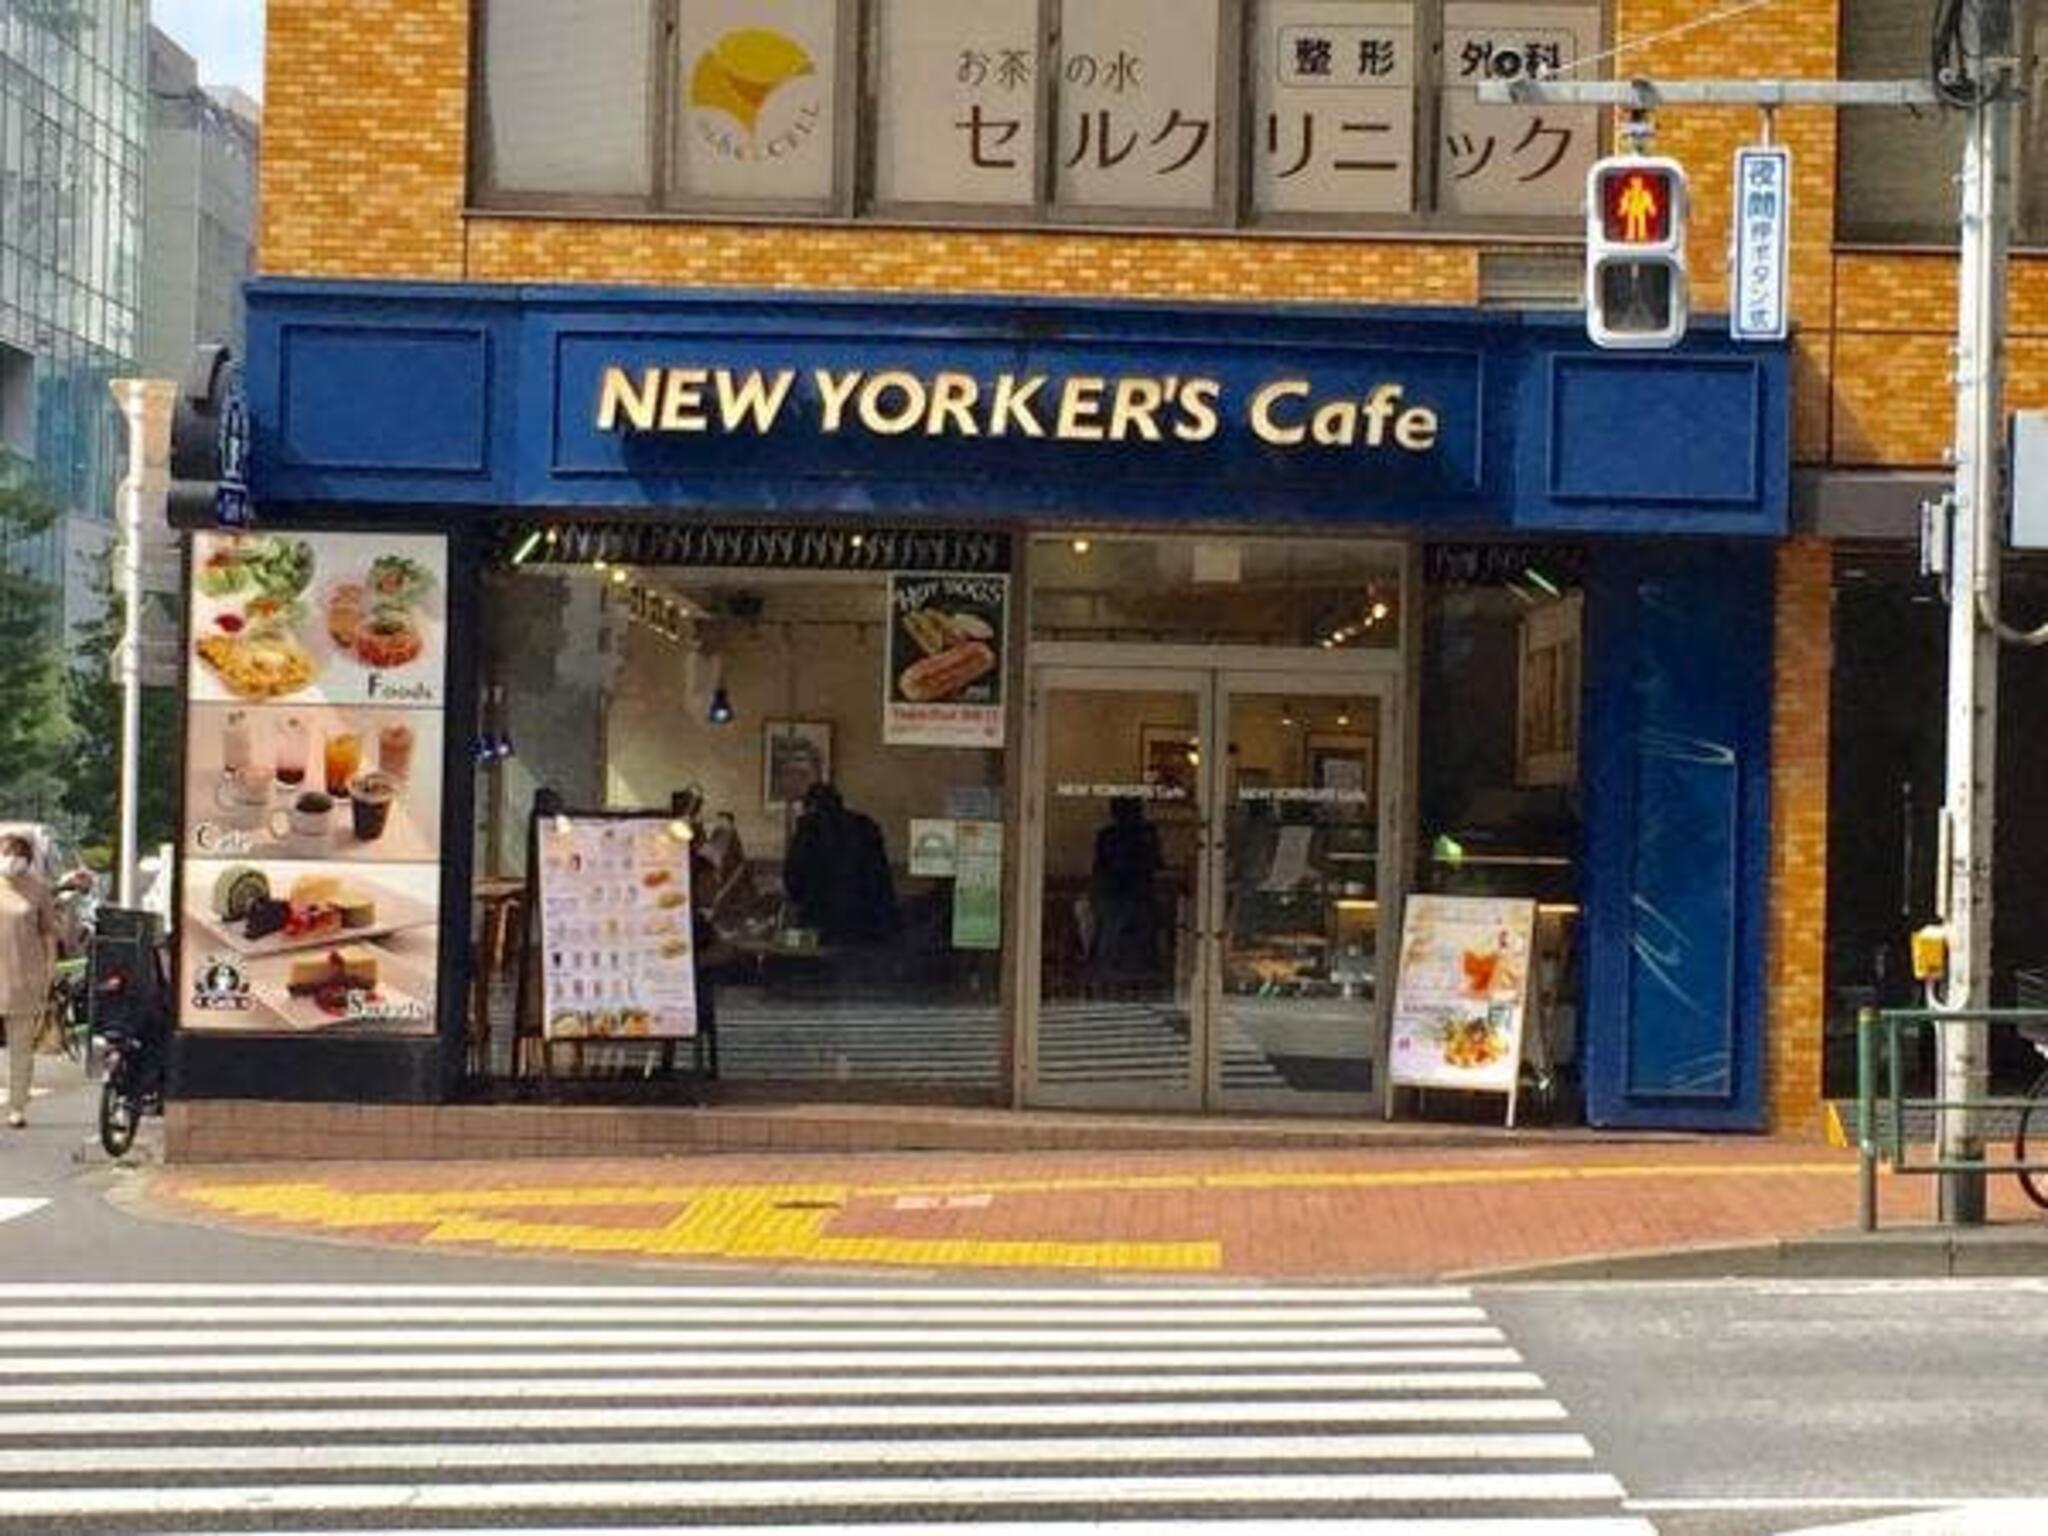 NEW YORKER'S Cafe 駿河台4丁目店の代表写真10